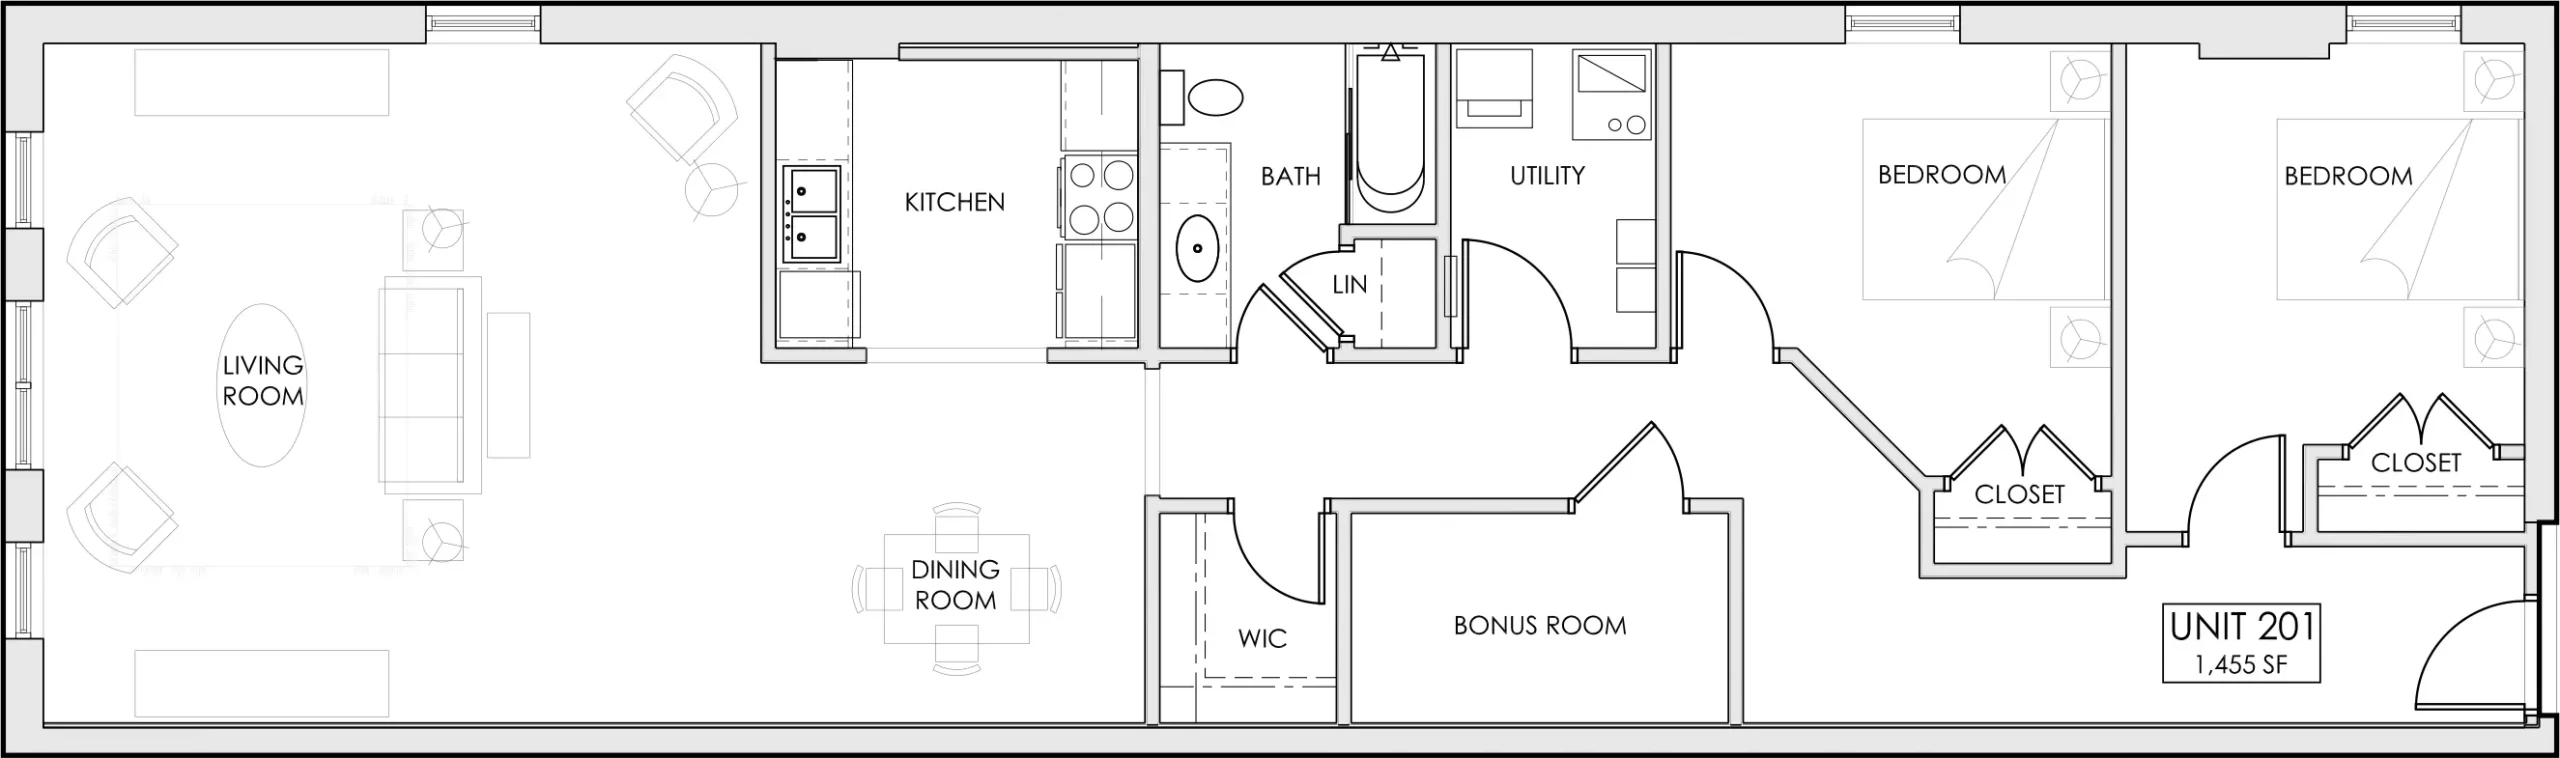 Floor Plan for Hotel Royal Unit 201